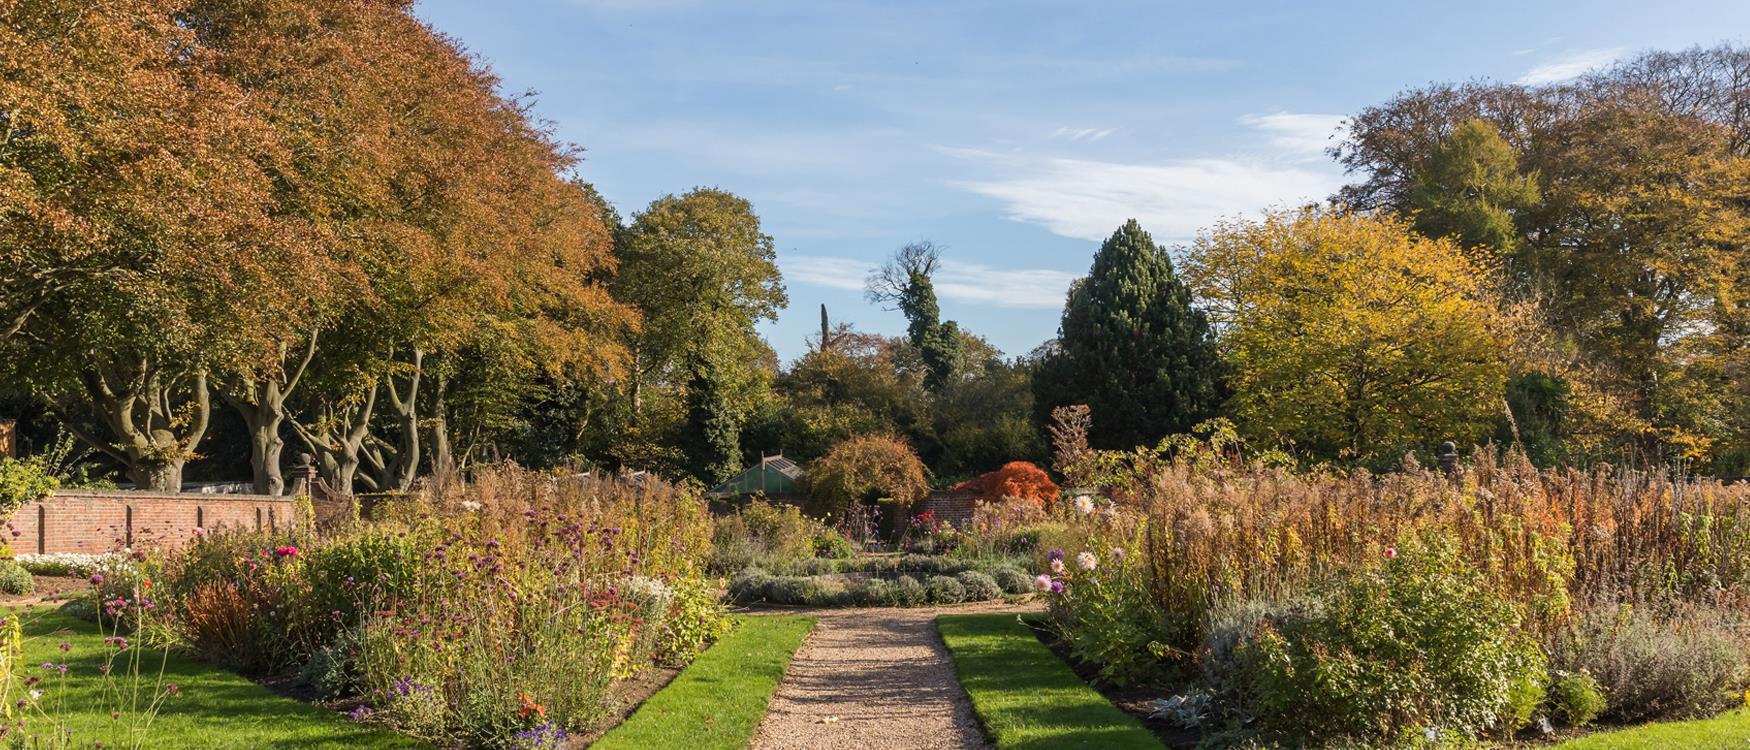 Winterbourne House & Garden - Discover Birmingham this autumn